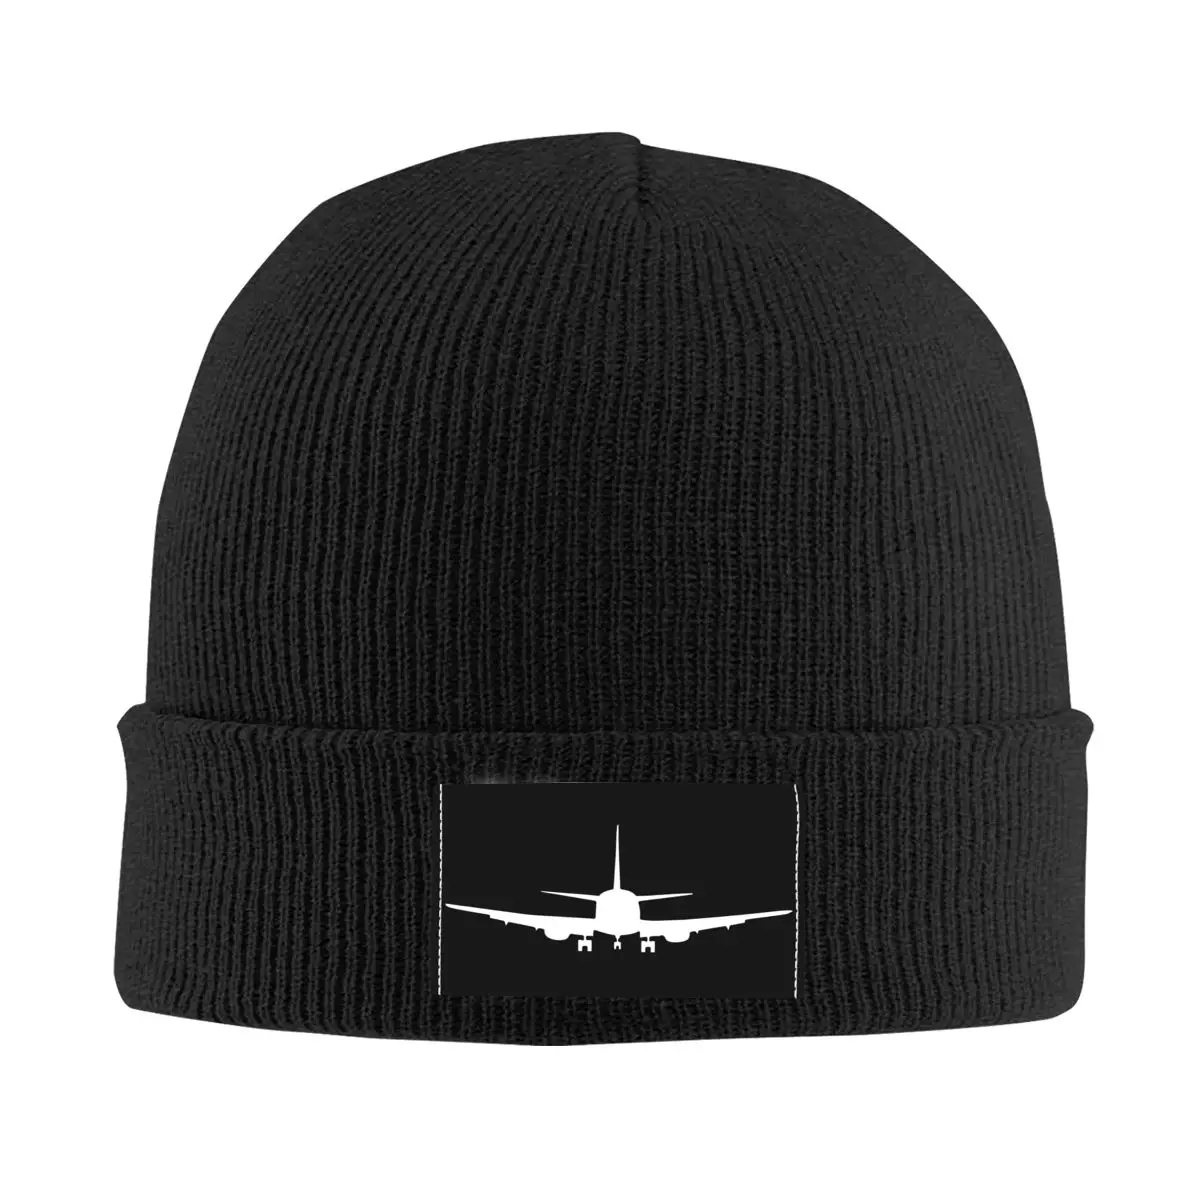 Awesome Airplane Skullies Beanies Caps Winter Warm Knitting Hat Hip Hop Adult Aviation Plane Pilot Bonnet Hats Outdoor Ski Cap 1